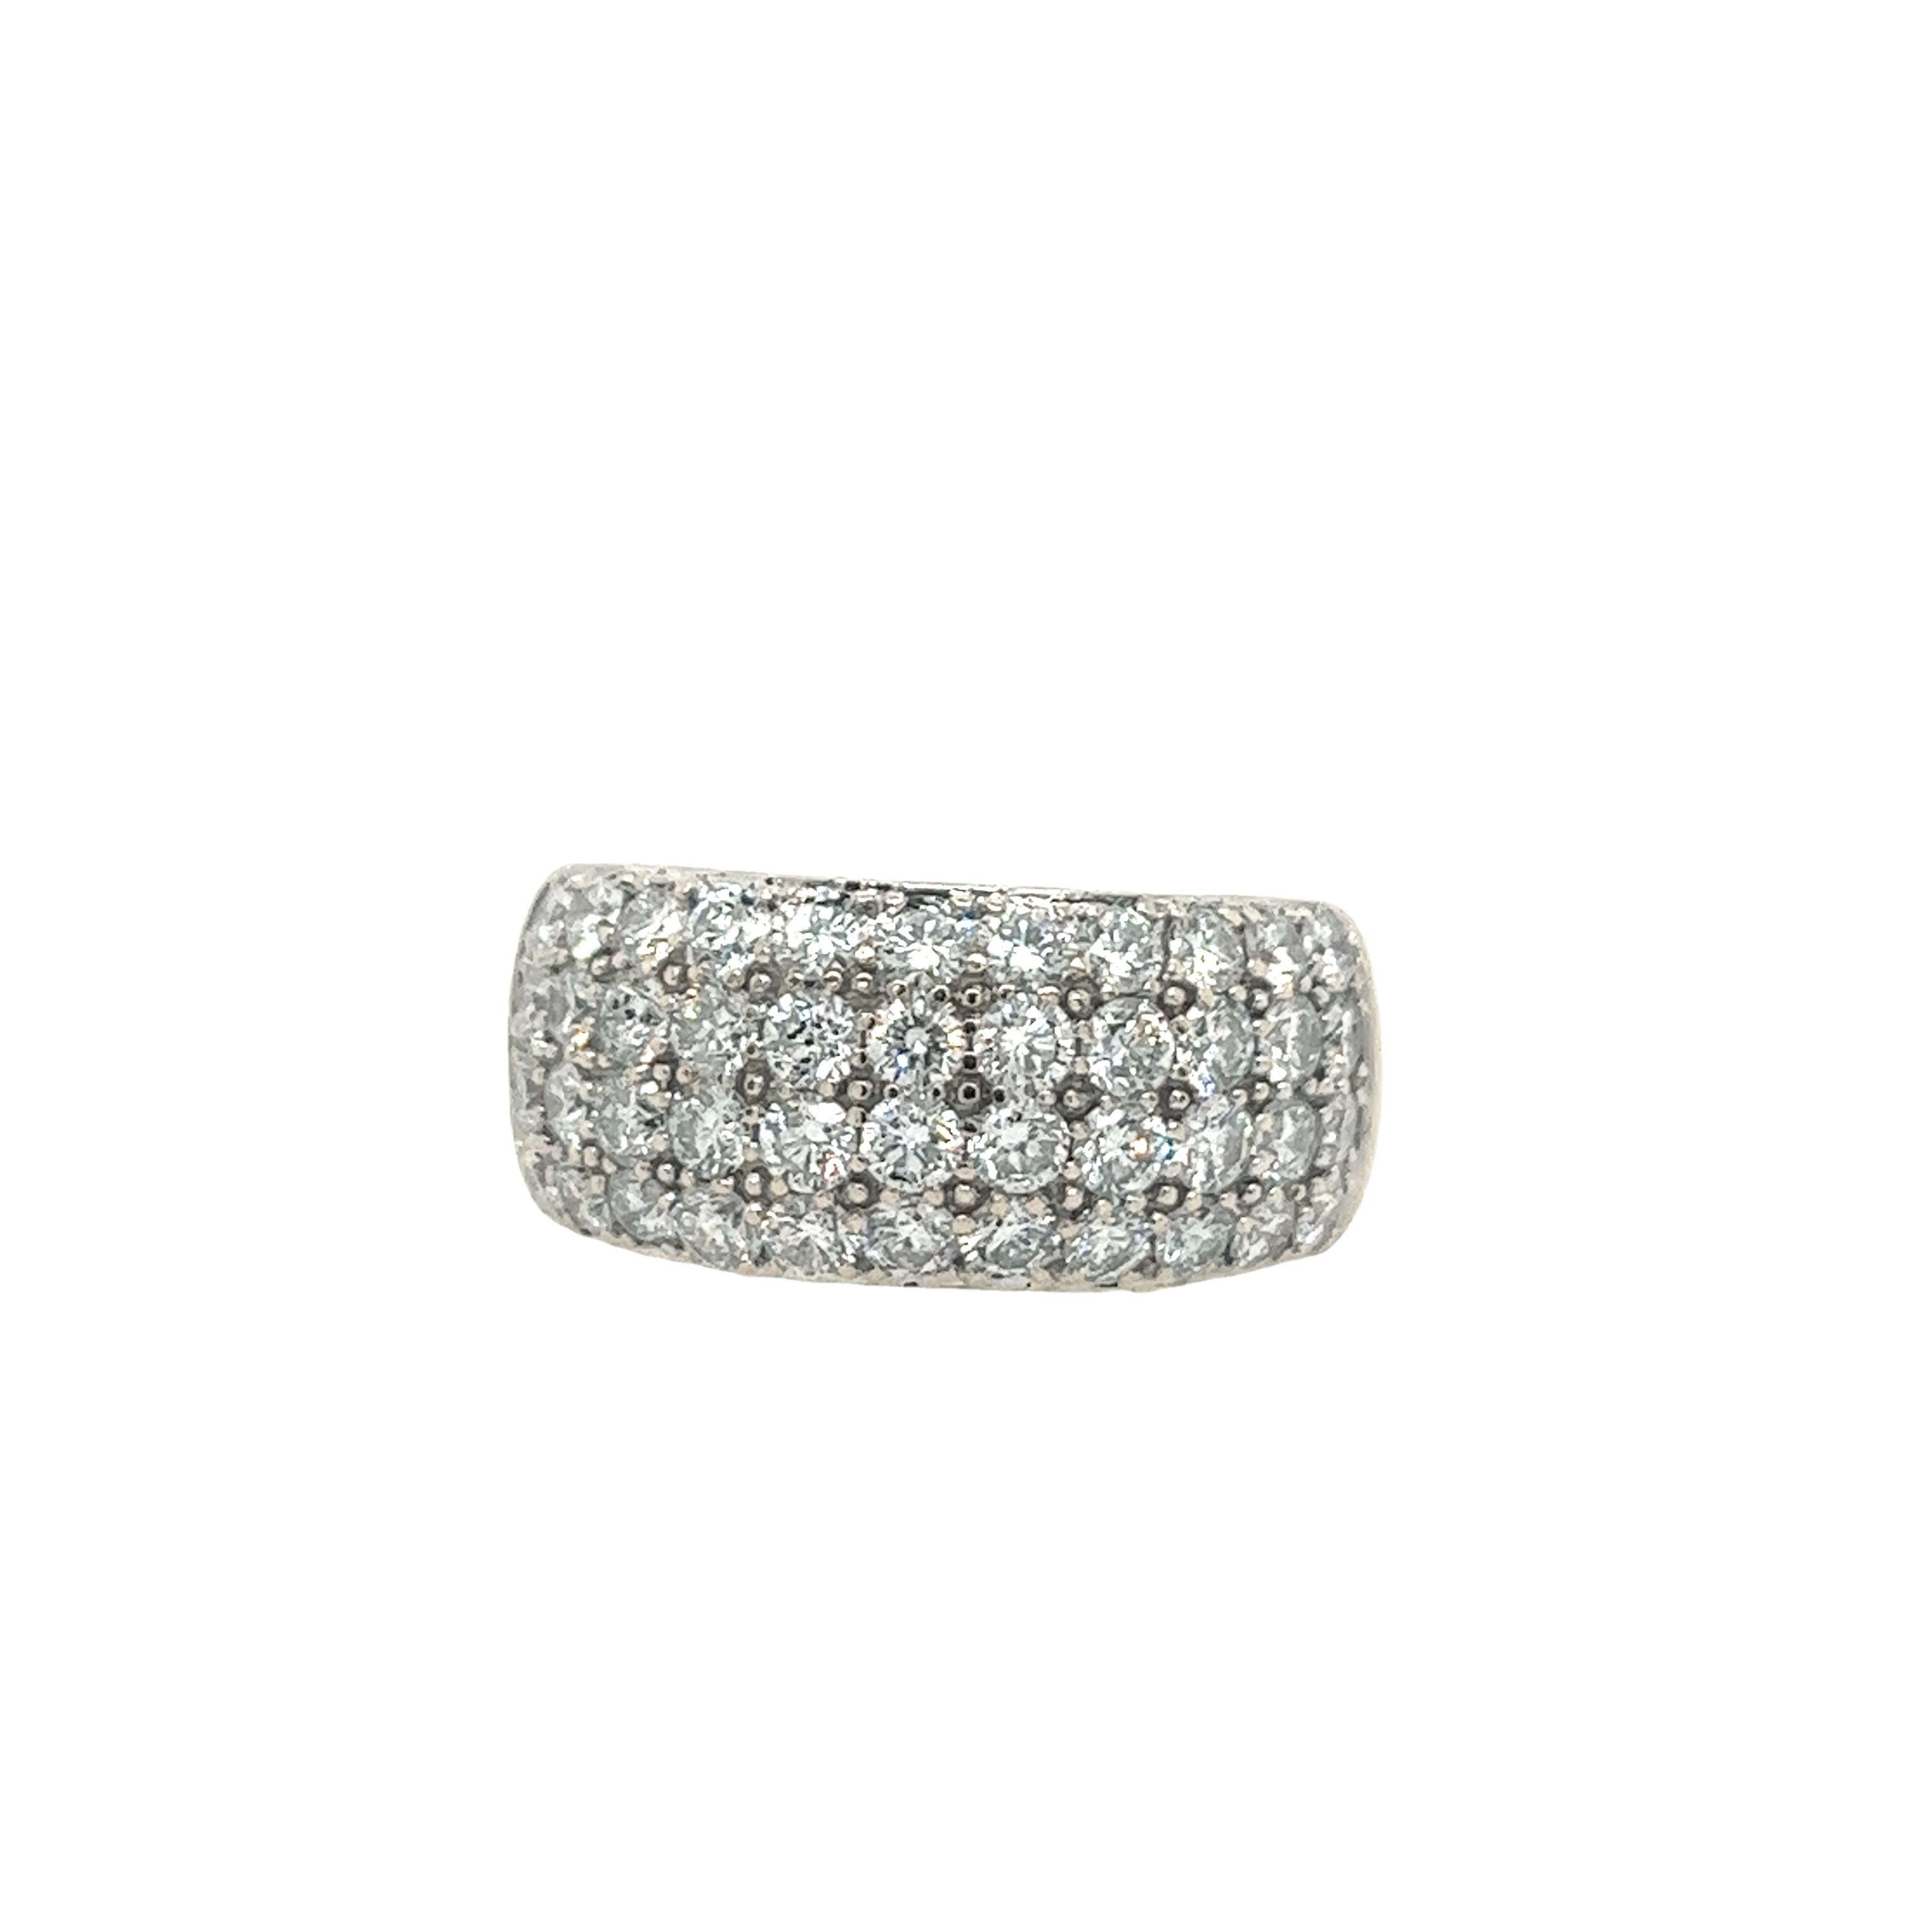 Round Cut 18ct White Gold 4-Row Diamond Dress Ring Set With 2.55 carats Natural Diamonds